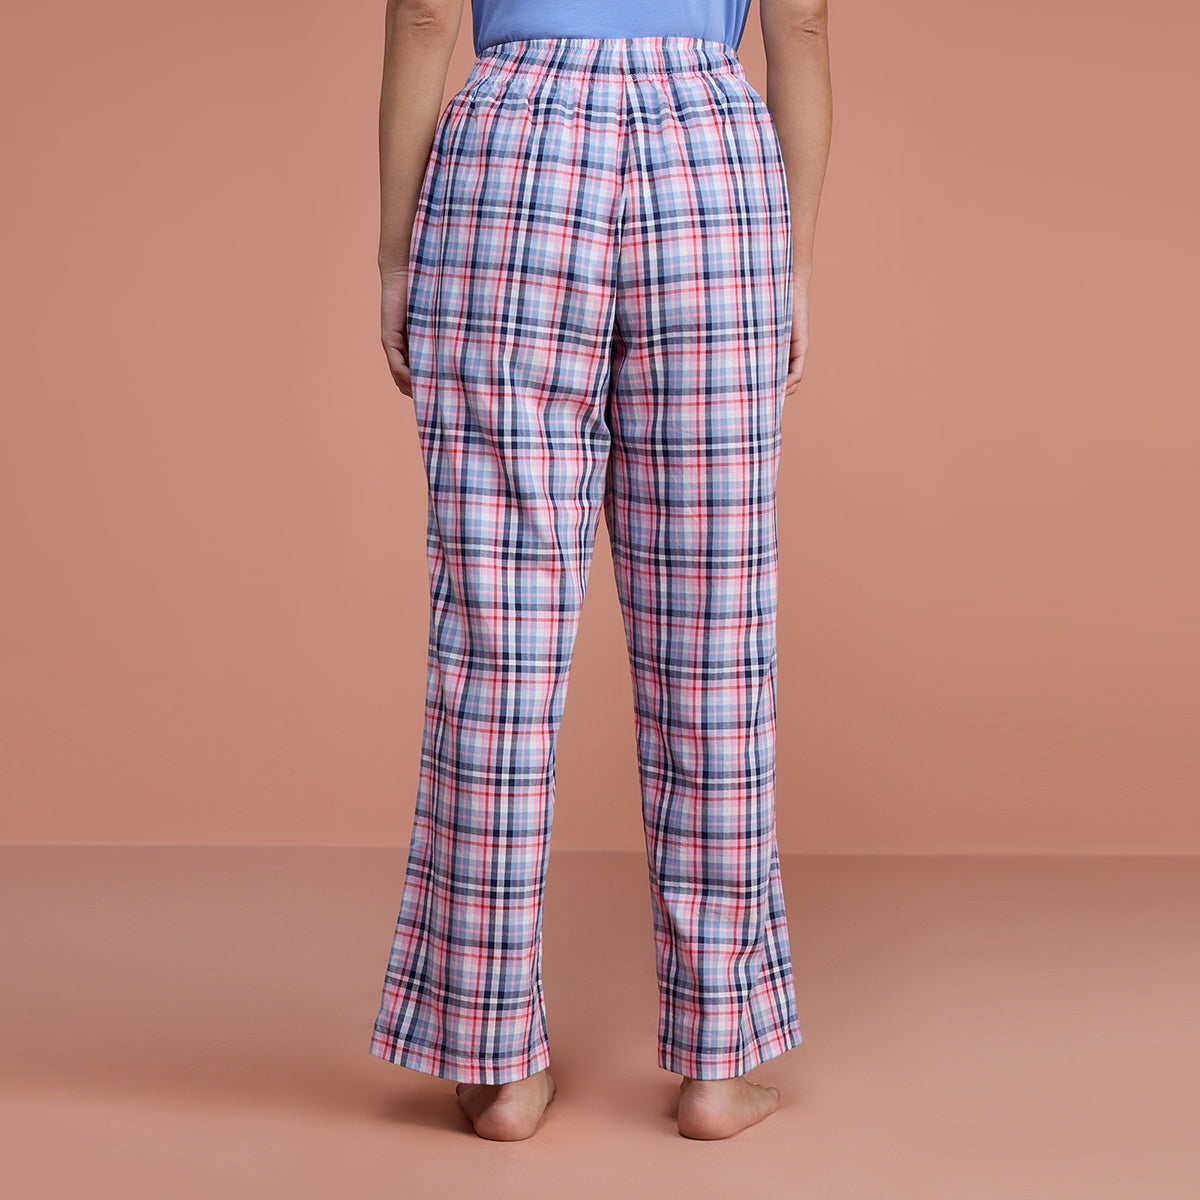 Cotton Plaid Pajama - NYS141 - Lavender Plaid